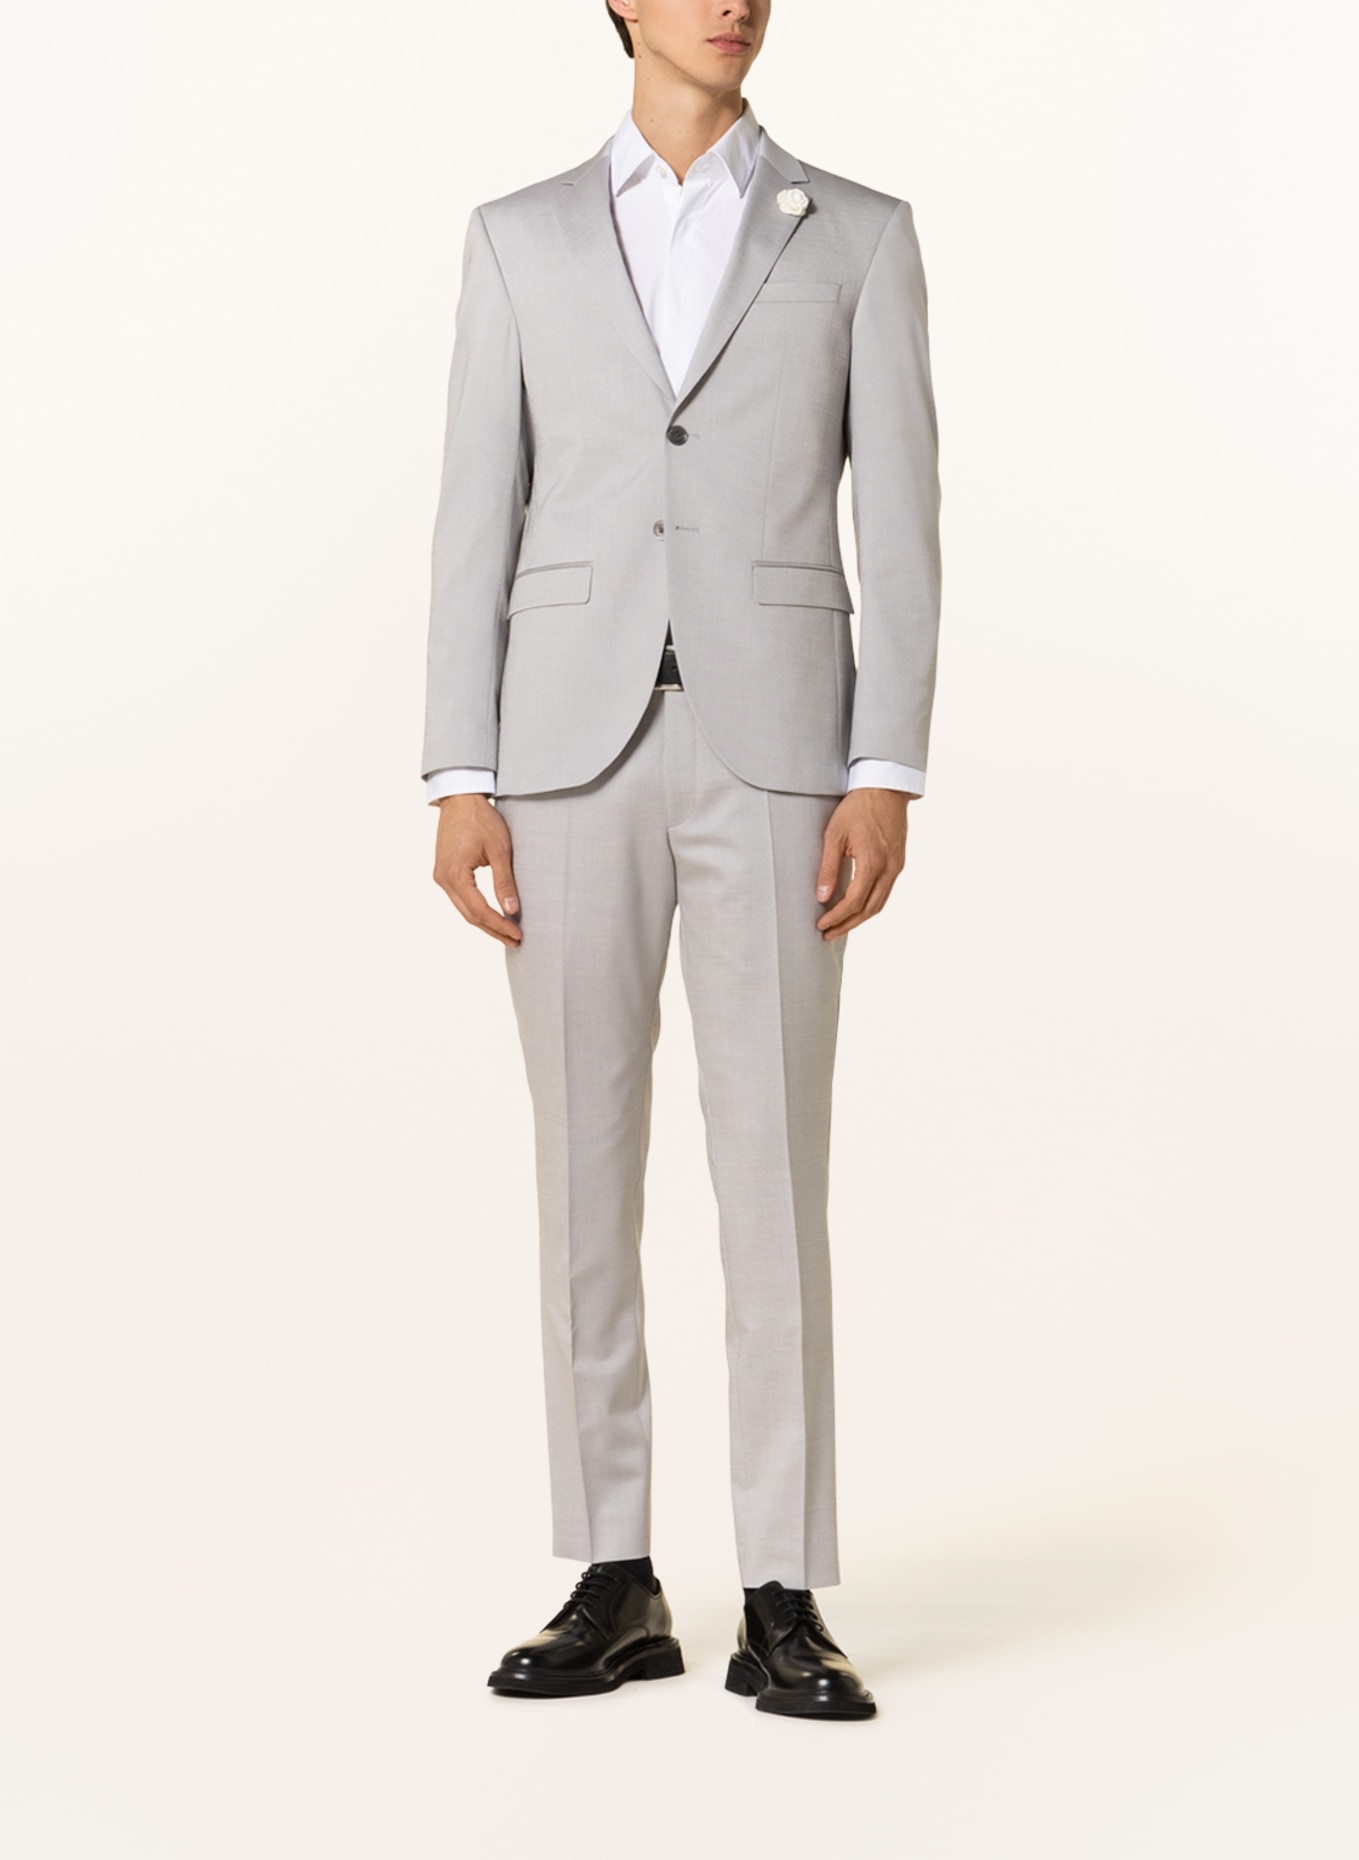 JOOP! Suit jacket WEDDING DAMON extra slim fit, Color: 060 Open Grey                  060 (Image 2)